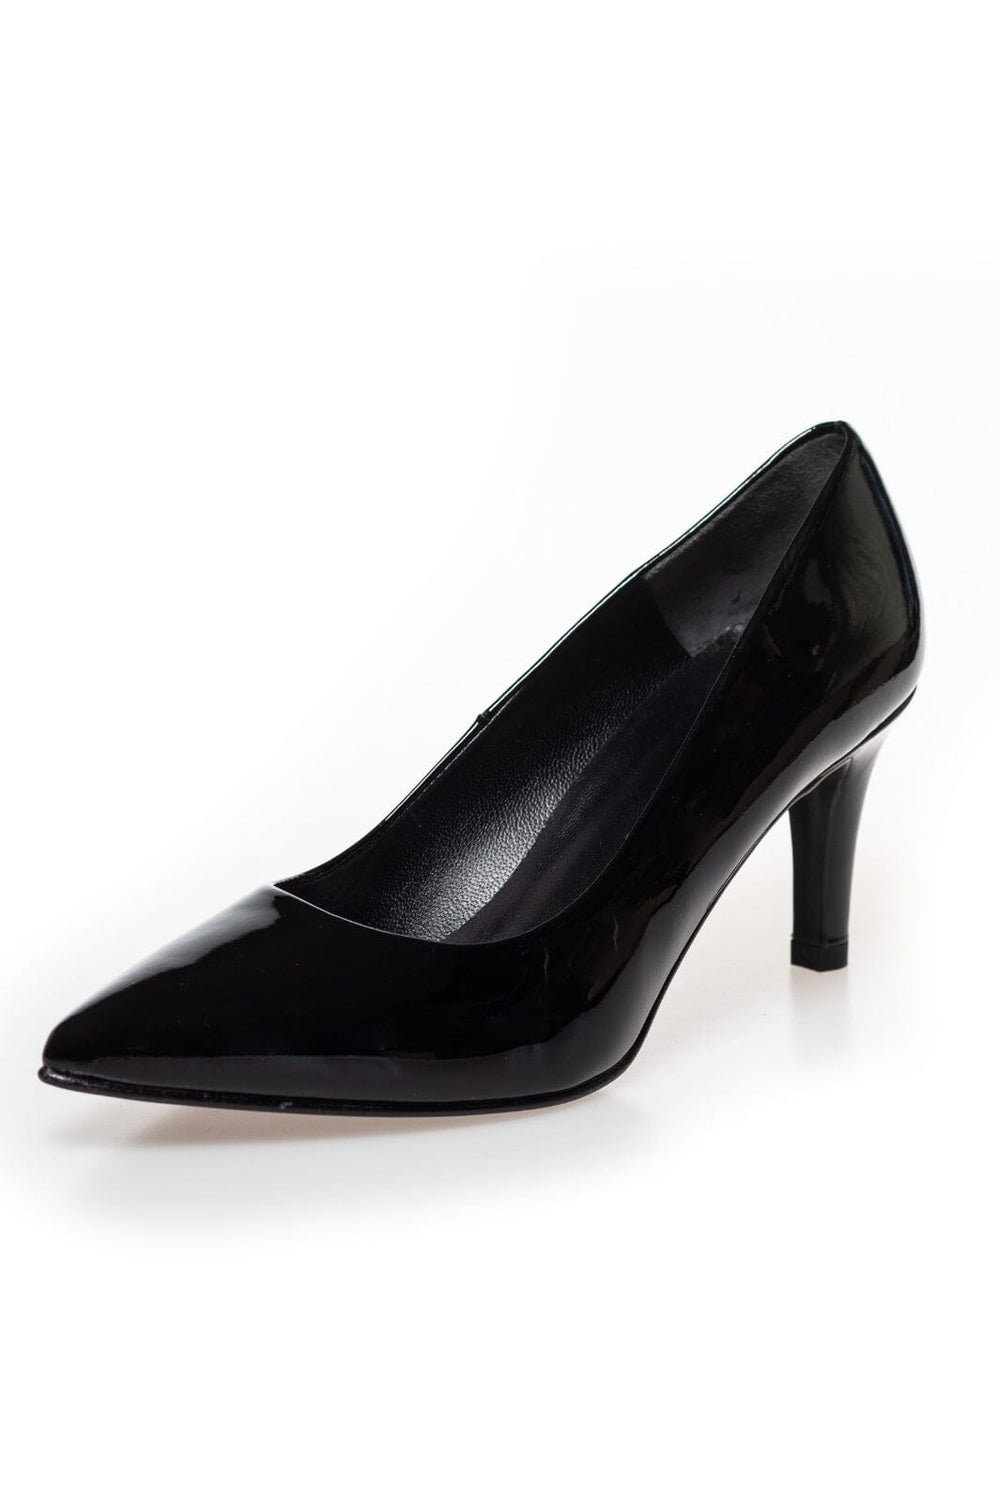 Copenhagen Shoes - Dream Of Me - 0011 Black Patent Stiletter 